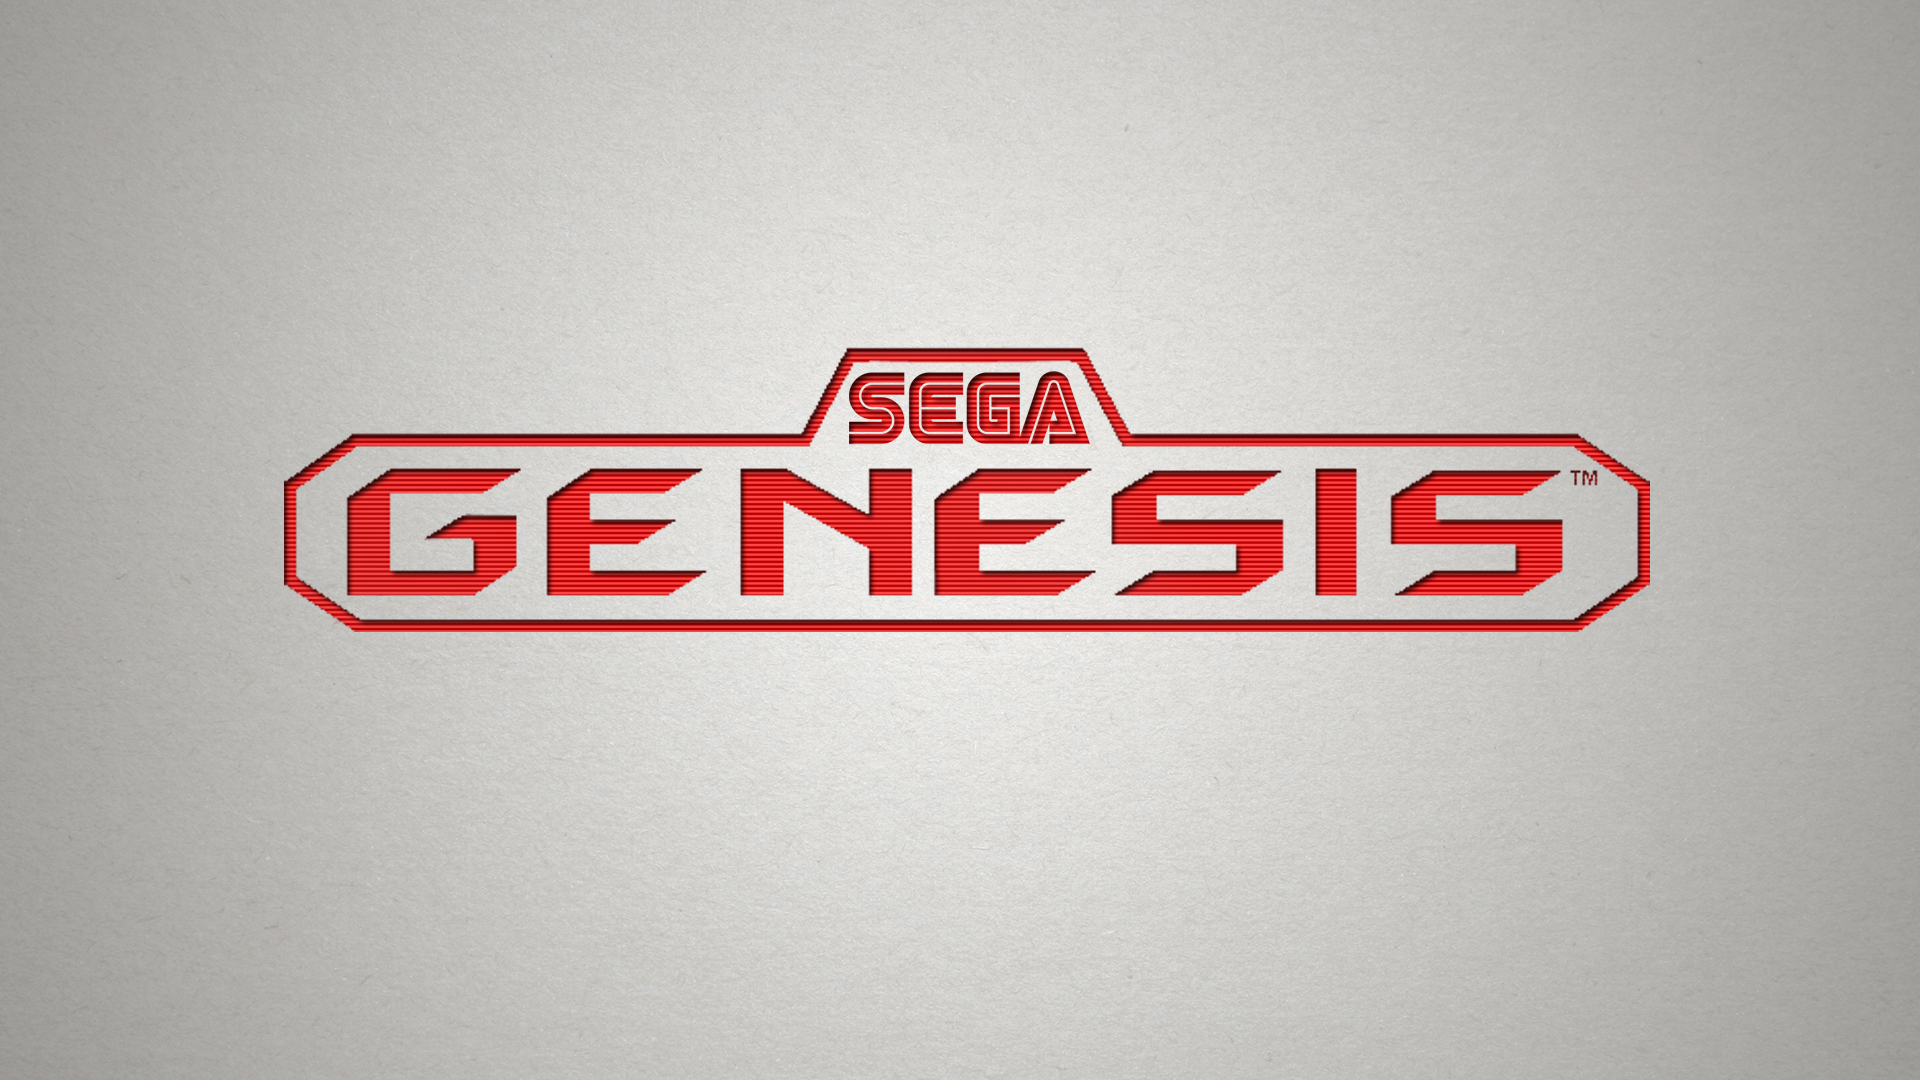 Sega Background. Sega Superstars Tennis Wallpaper, Sega Wallpaper and Sega Saturn Wallpaper